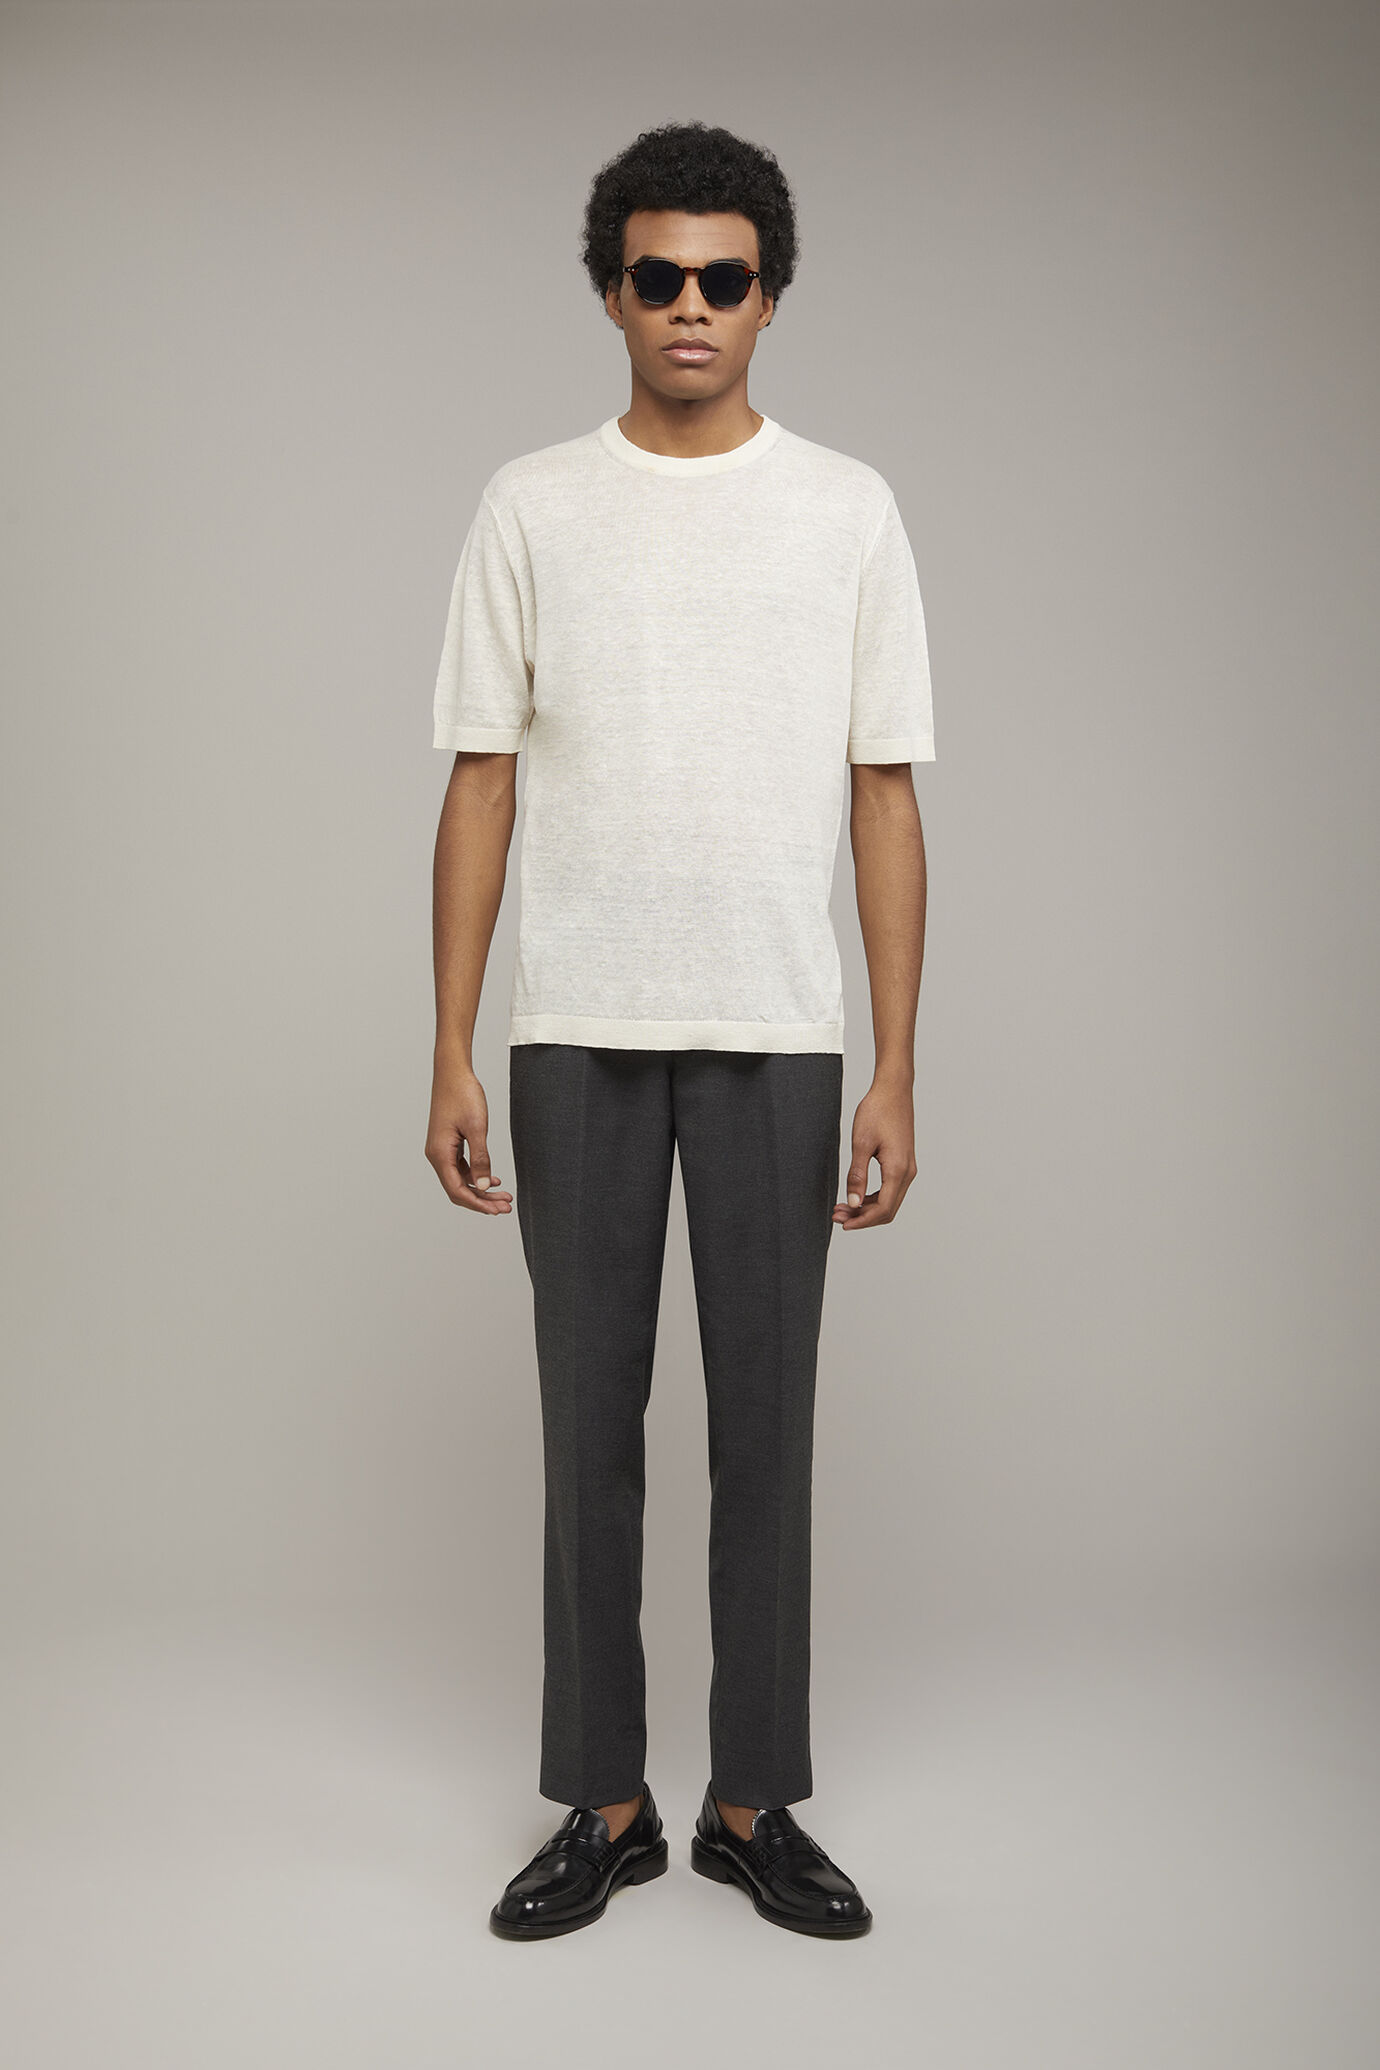 Men's knitted t-shirt 100% linen short-sleeved regular fit image number 0